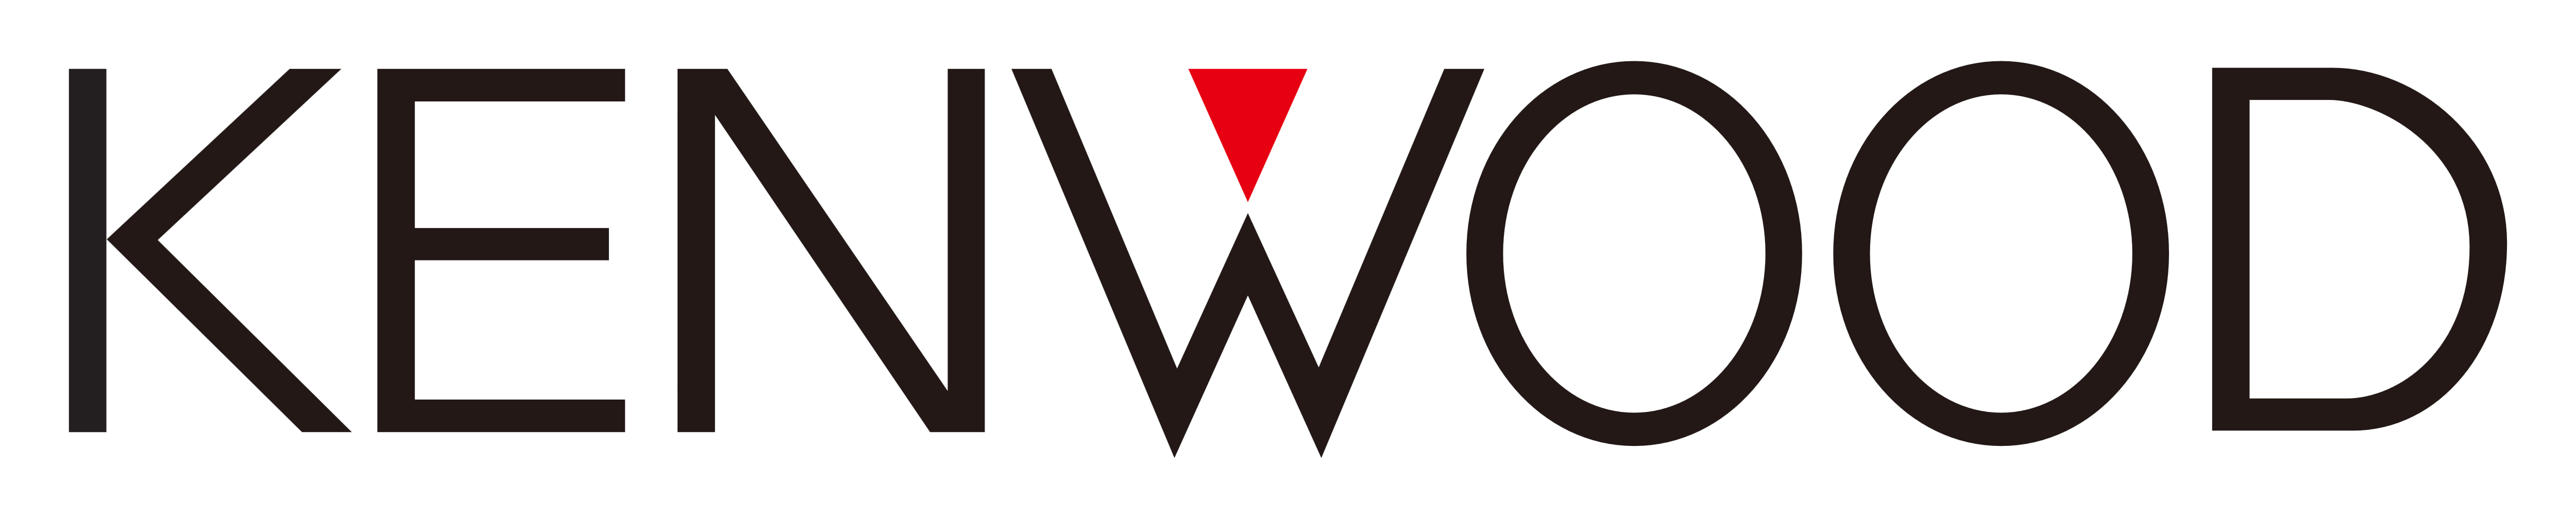 Kenwood_logo_logotype_wordmark